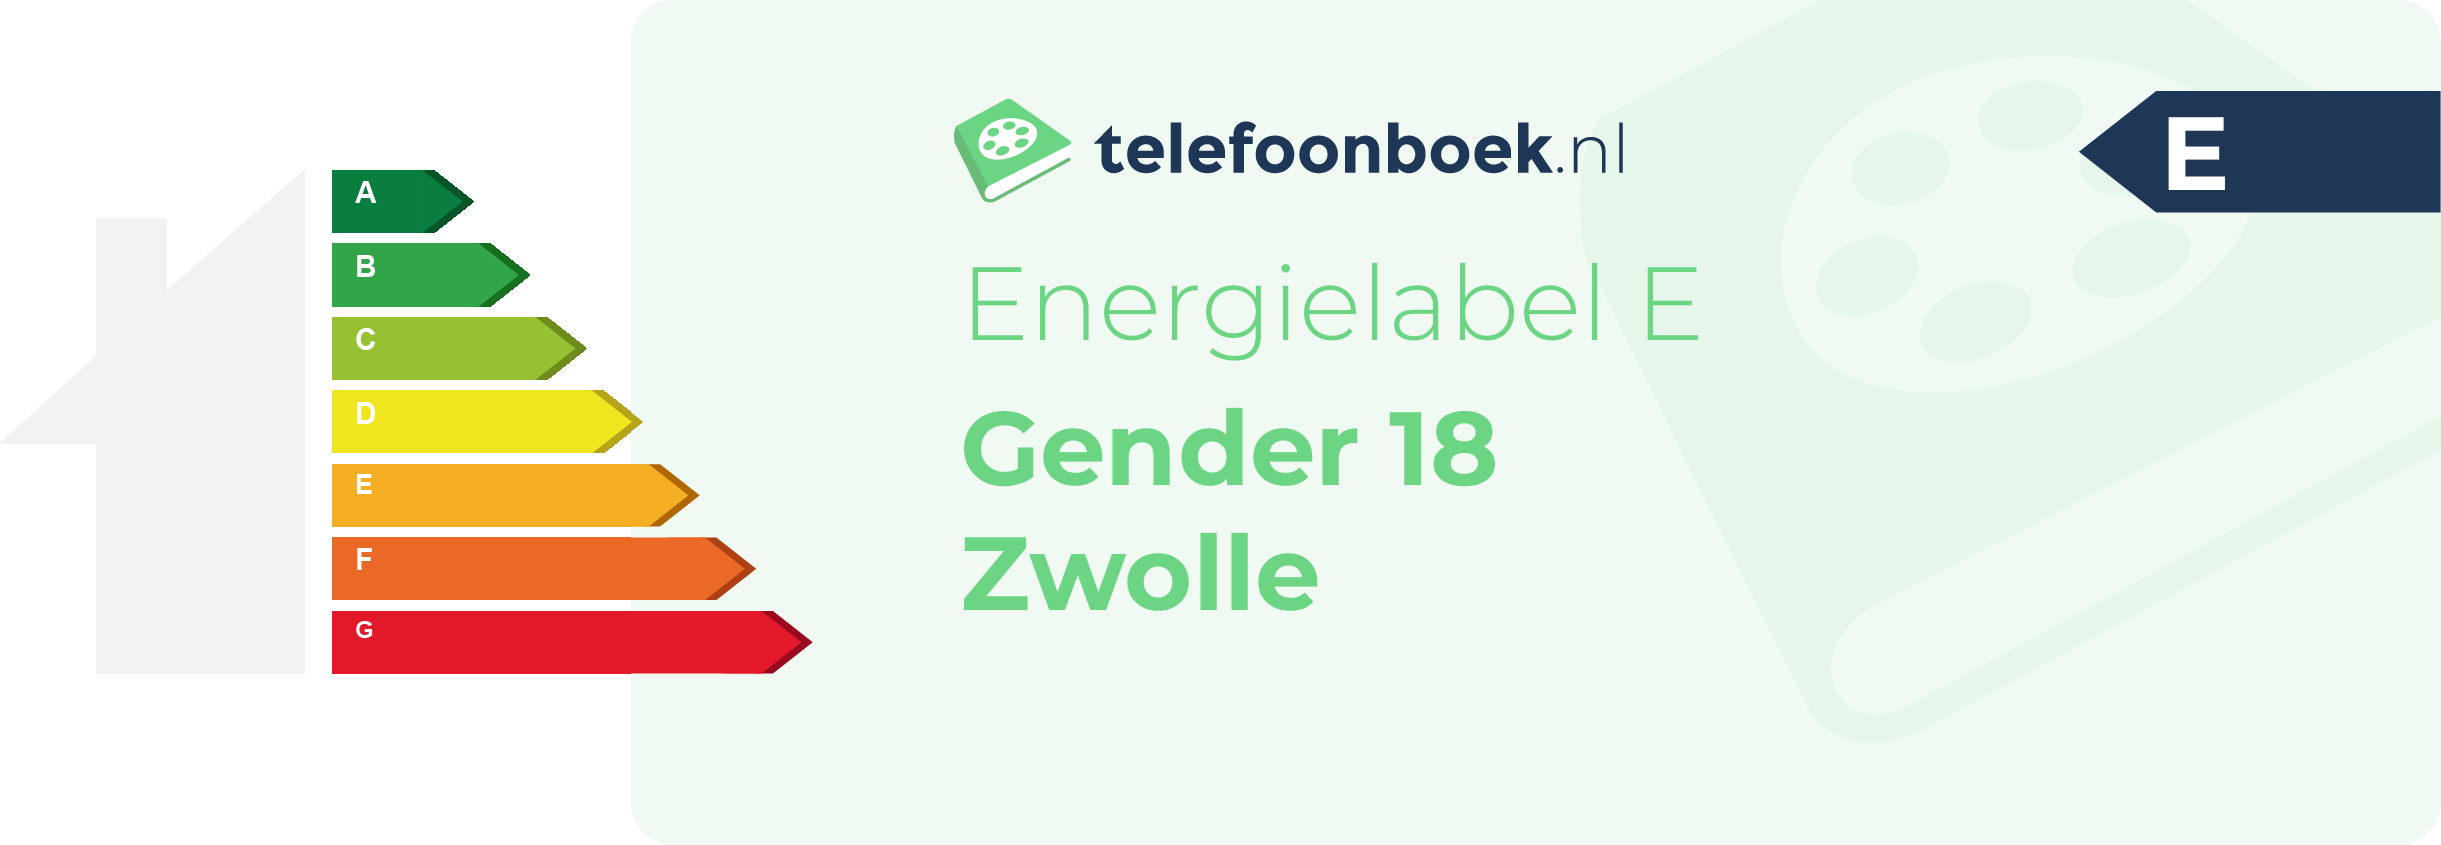 Energielabel Gender 18 Zwolle